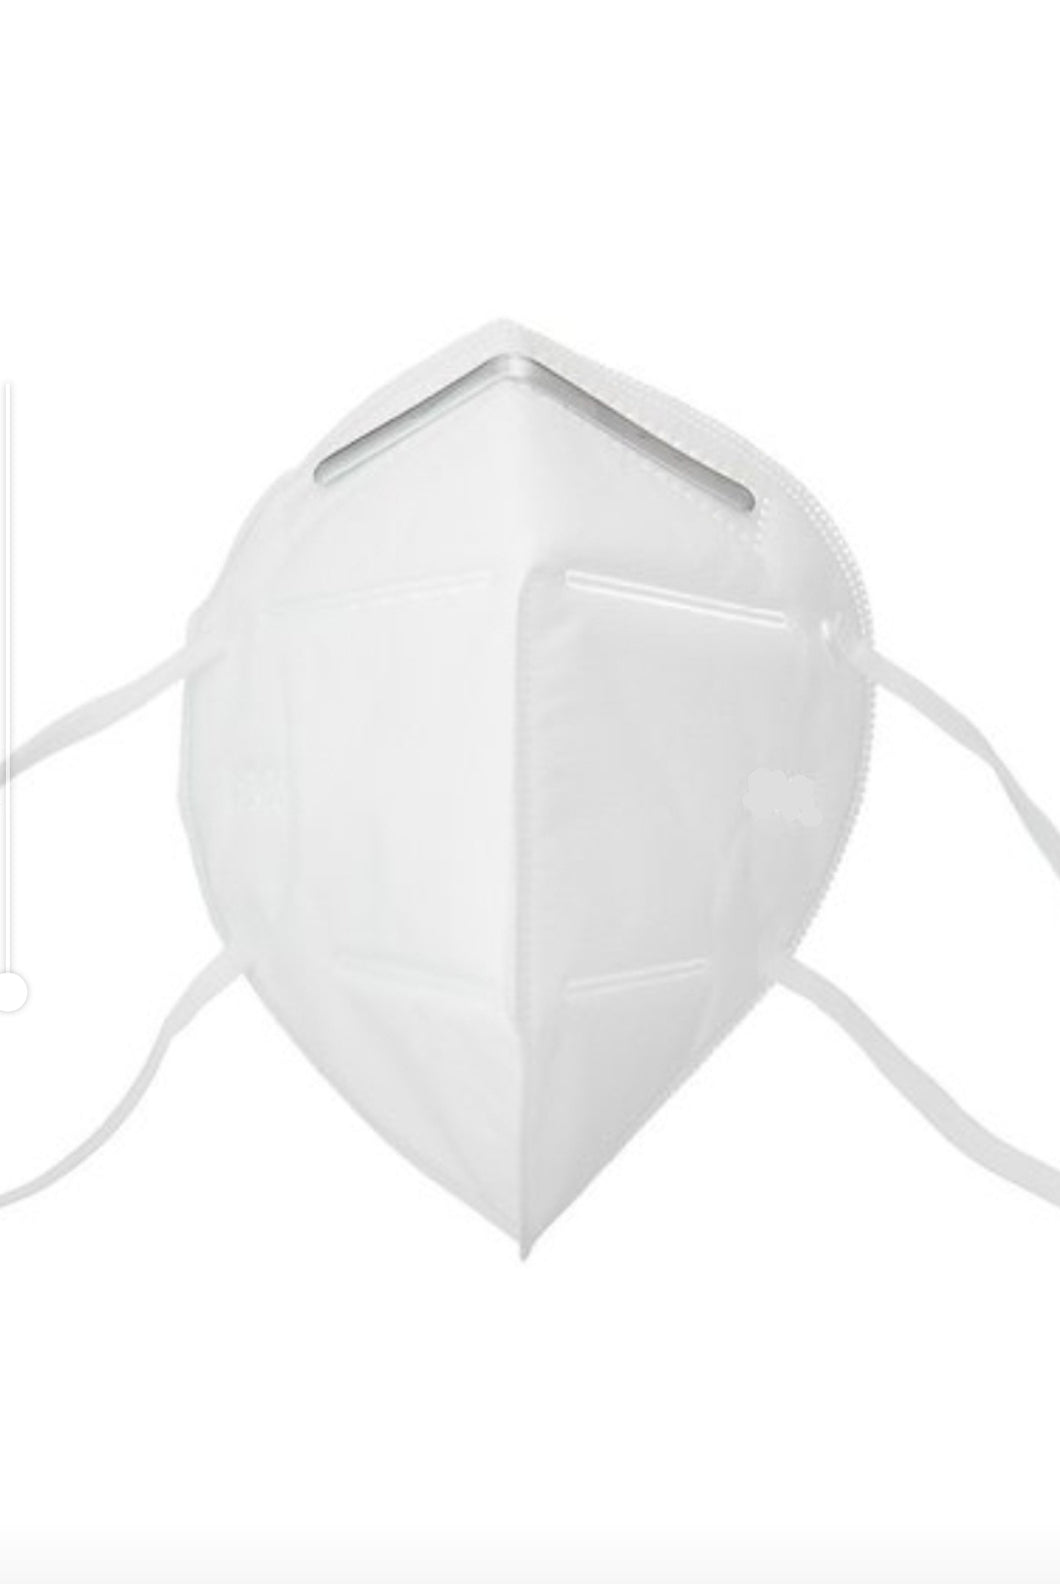 Anti-Viral Dust Mask (White)